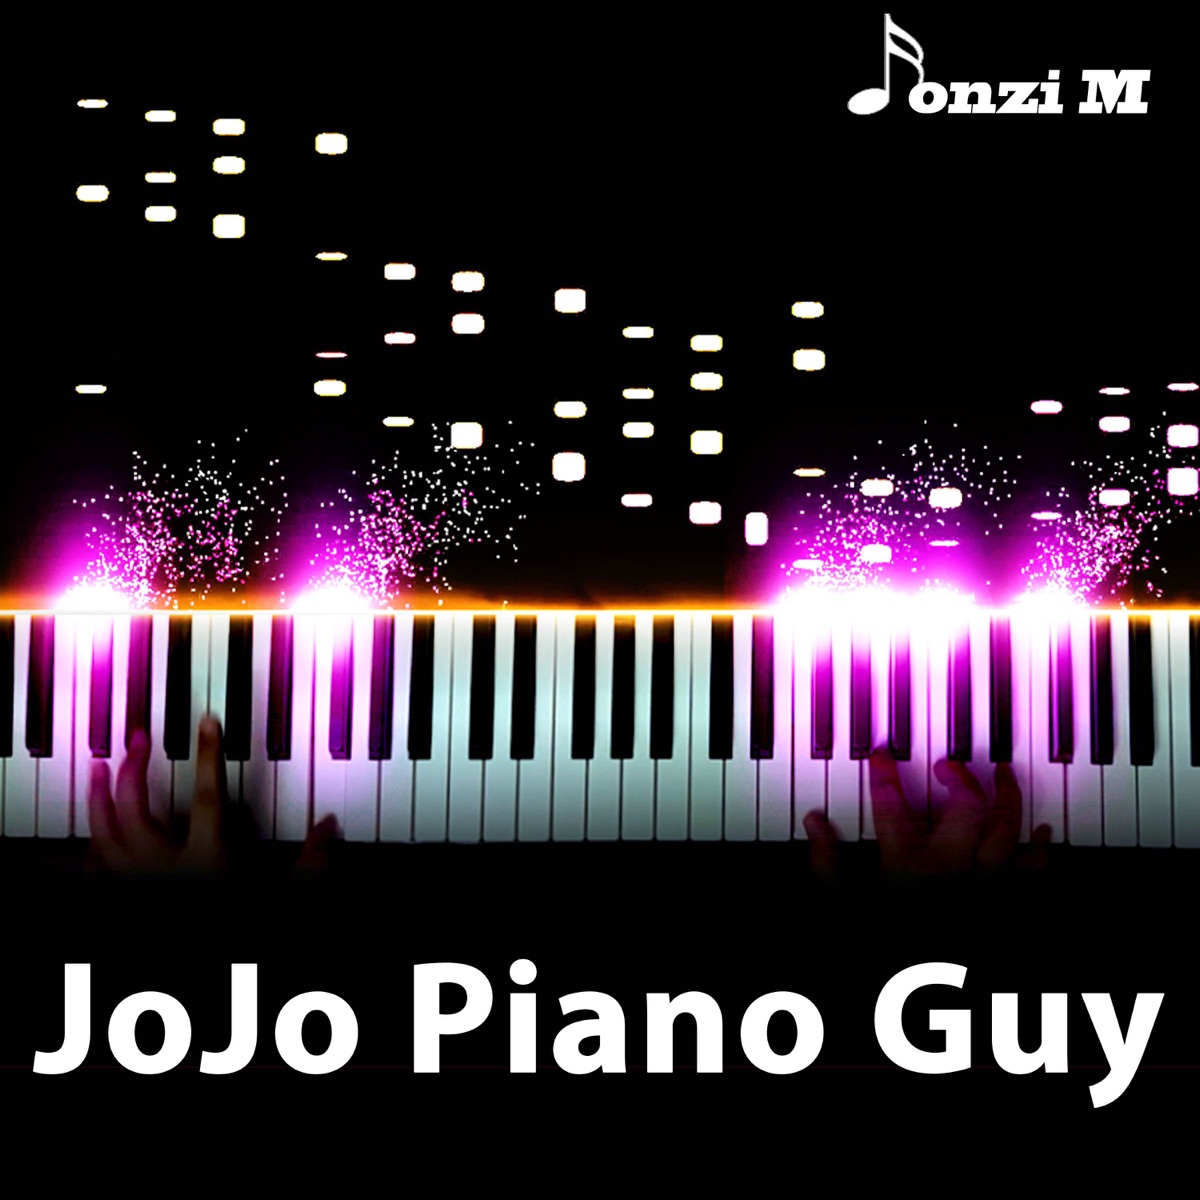 JoJo Piano Guy - Single - Album by Fonzi M - Apple Music